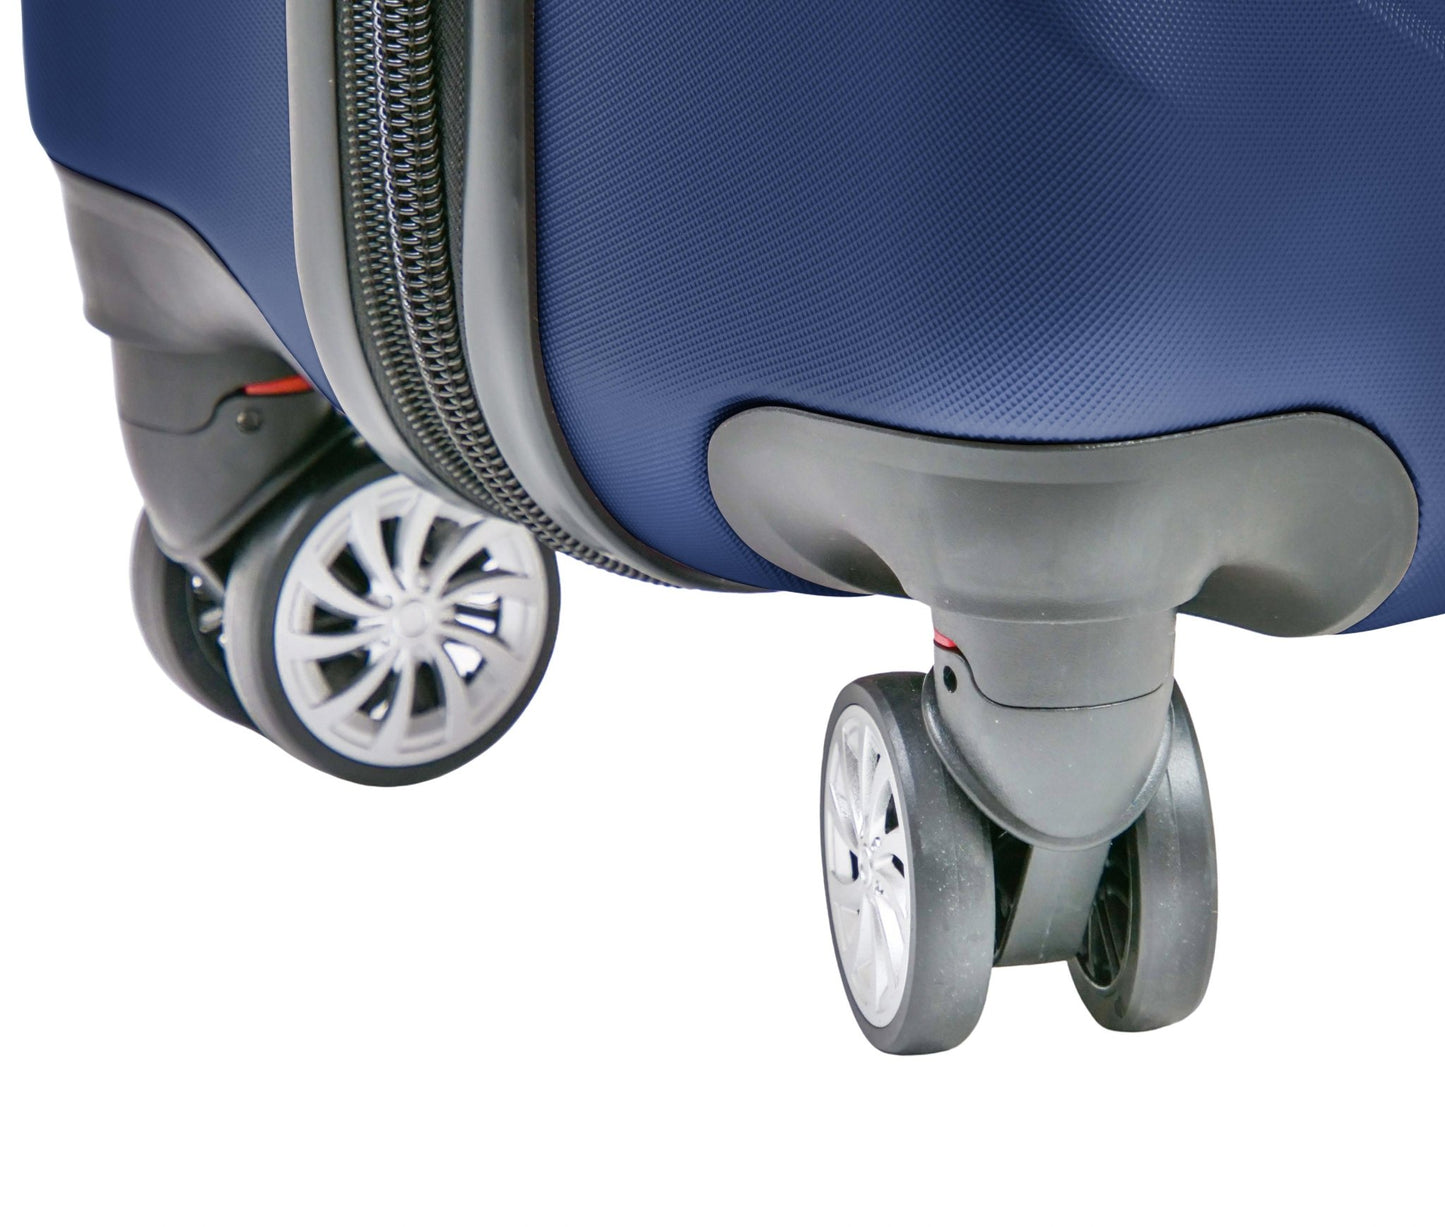 SANTA BARBARA POLO & RAQUET CLUB - מזוודה טרולי עלייה למטוס 20" דגם 1701 בצבע נייבי - MASHBIR//365